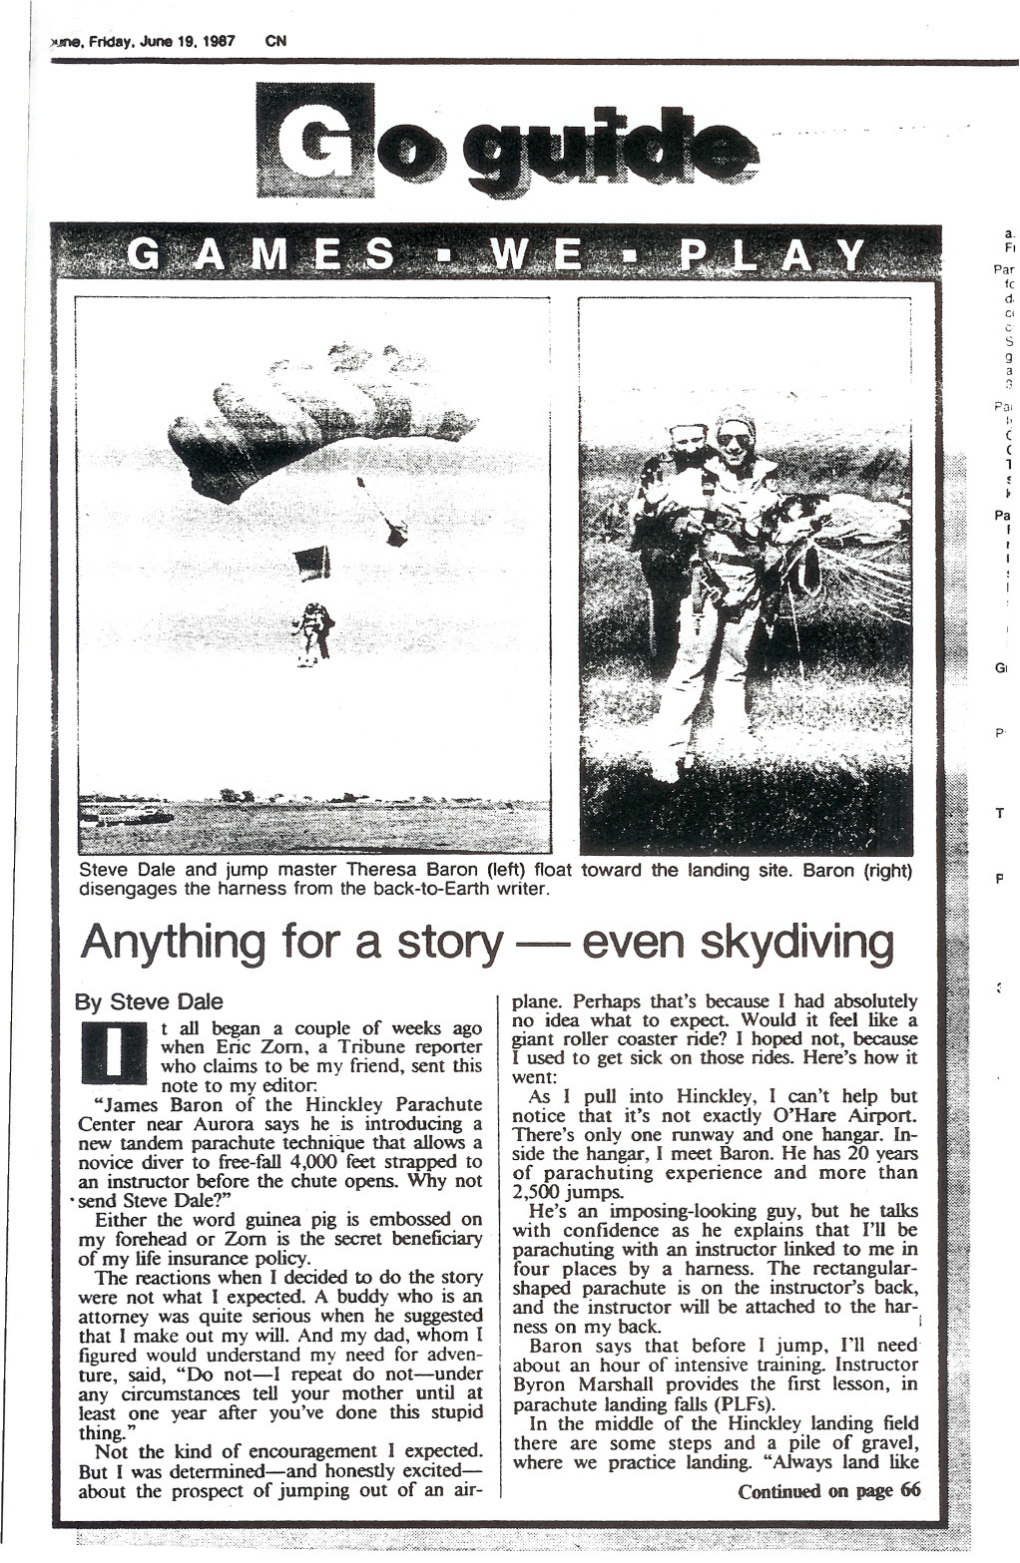 Skydiving by Steve Dale Plane